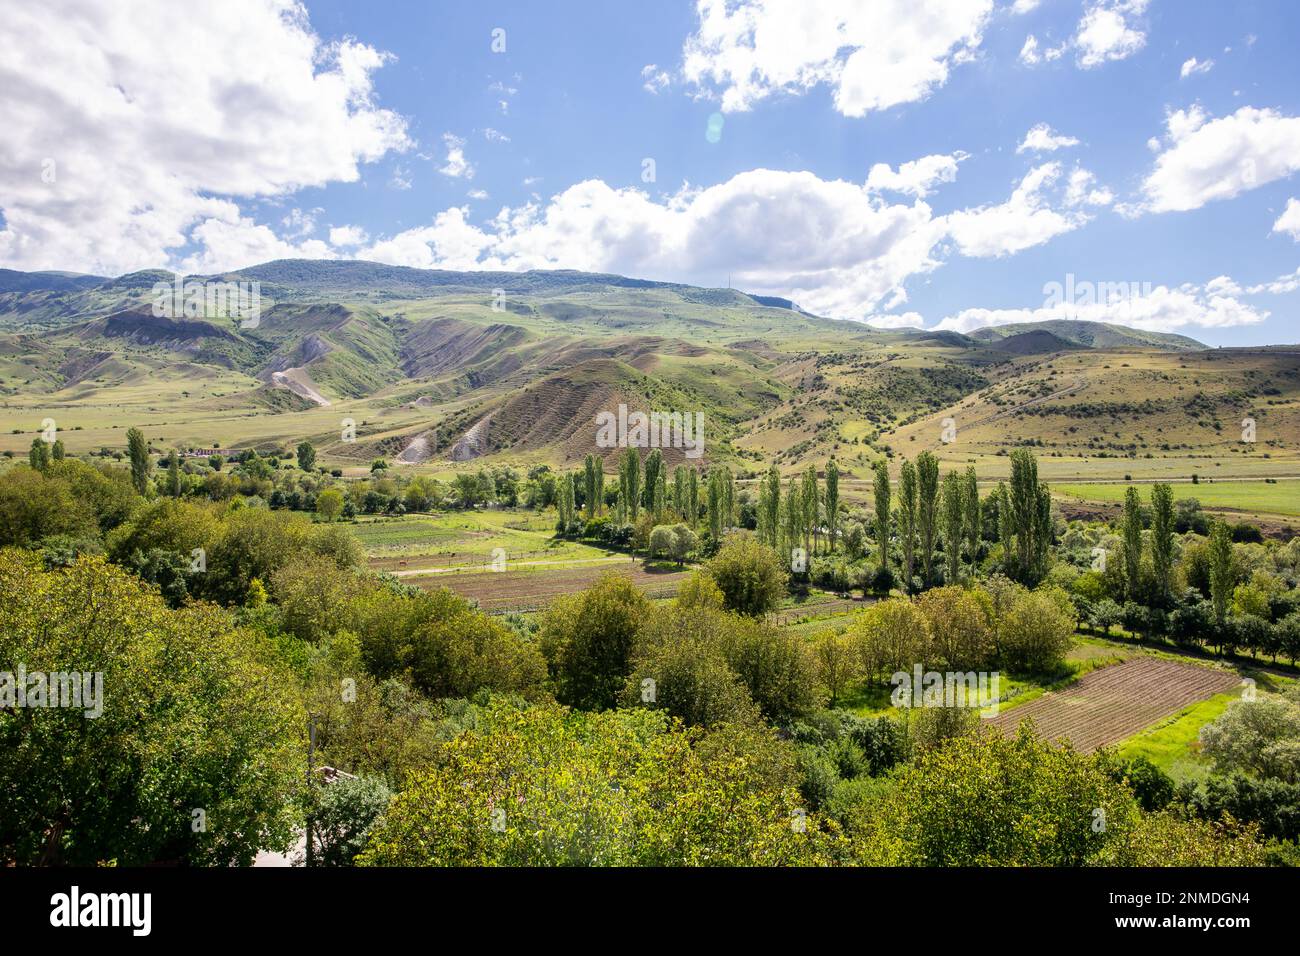 Mtkvari river valley landscape in Samtskhe - Javakheti region, Georgia with Lesser Caucasus mountains, green vineyards, view from Aspindza. Stock Photo